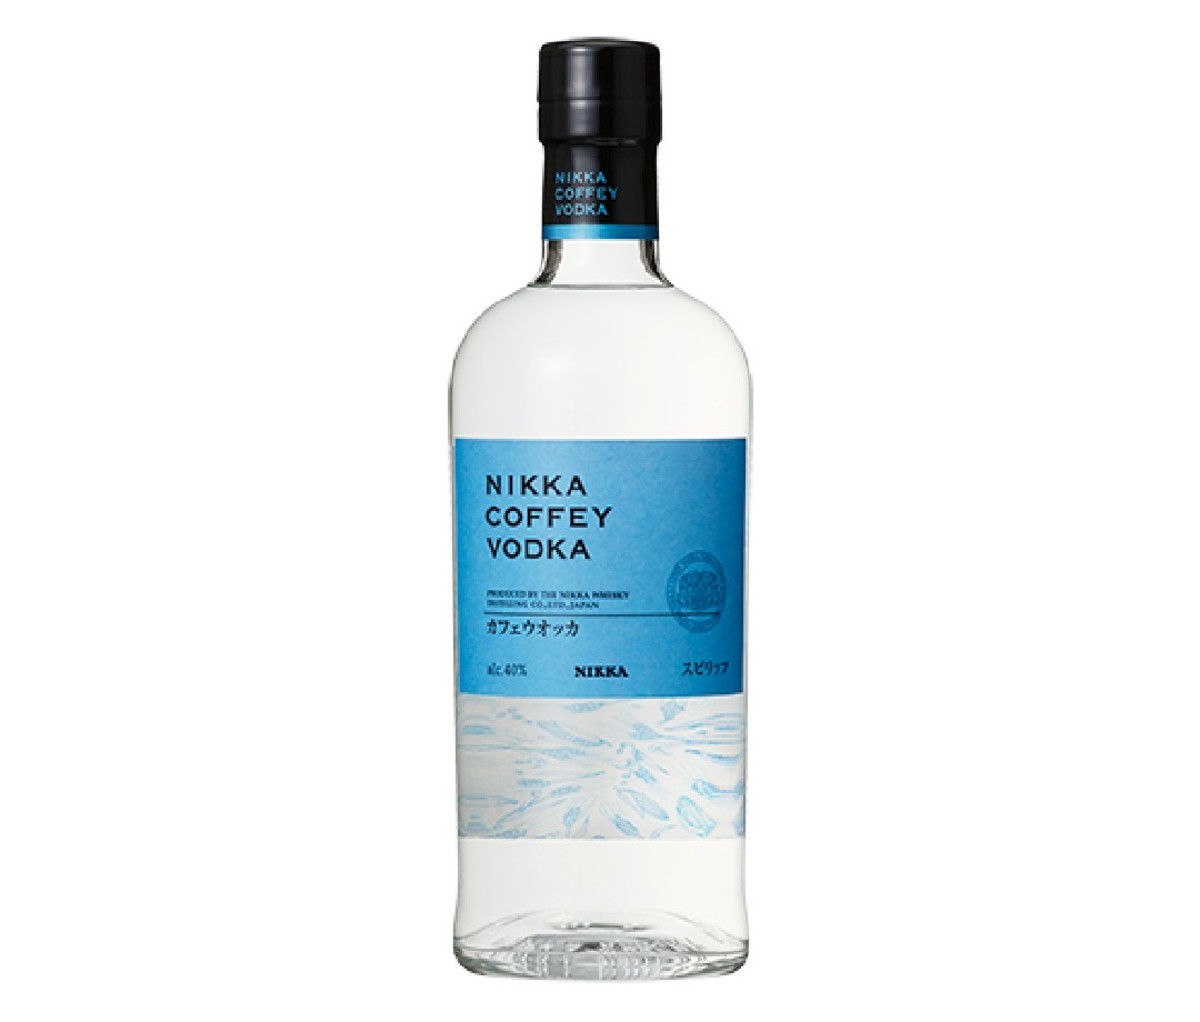 A bottle of Nikka Coffey Vodka.